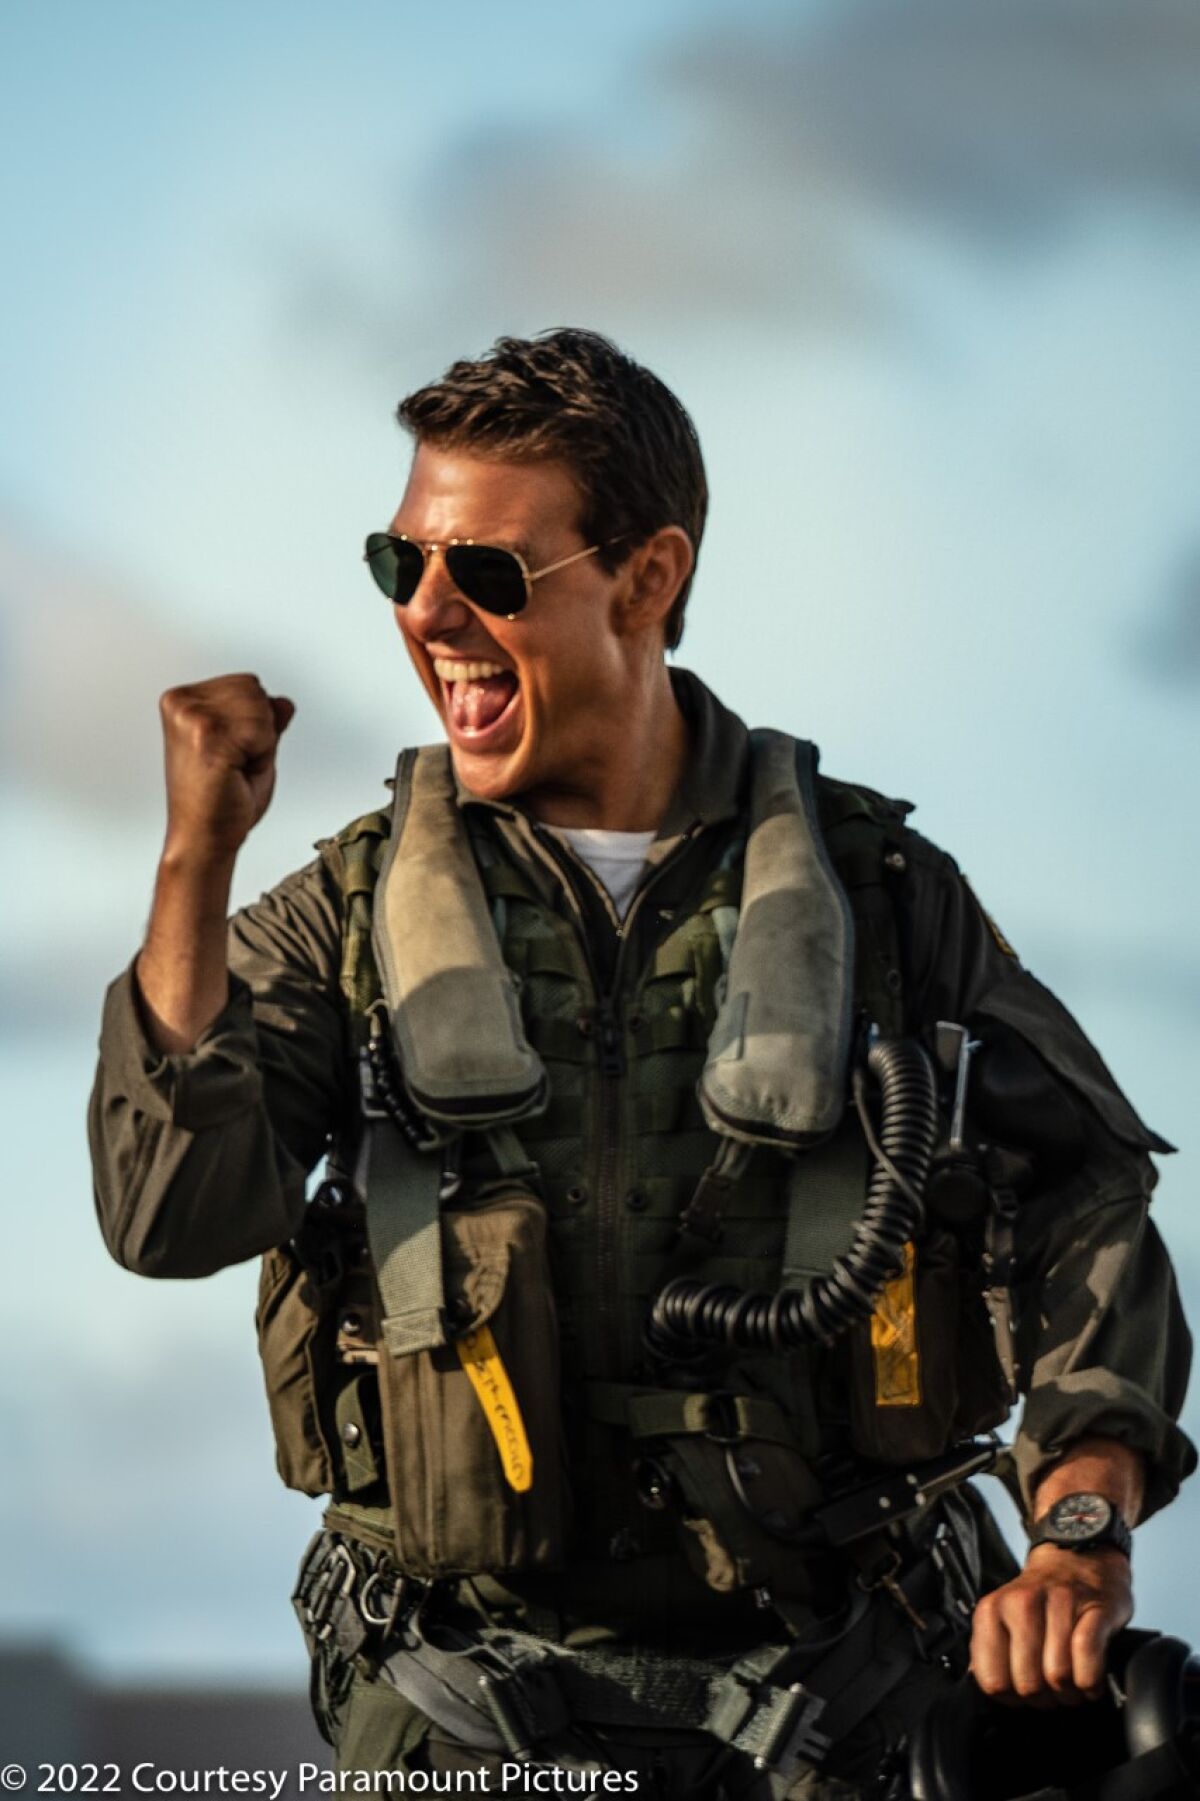 Tom Cruise plays Capt. Pete “Maverick” Mitchell